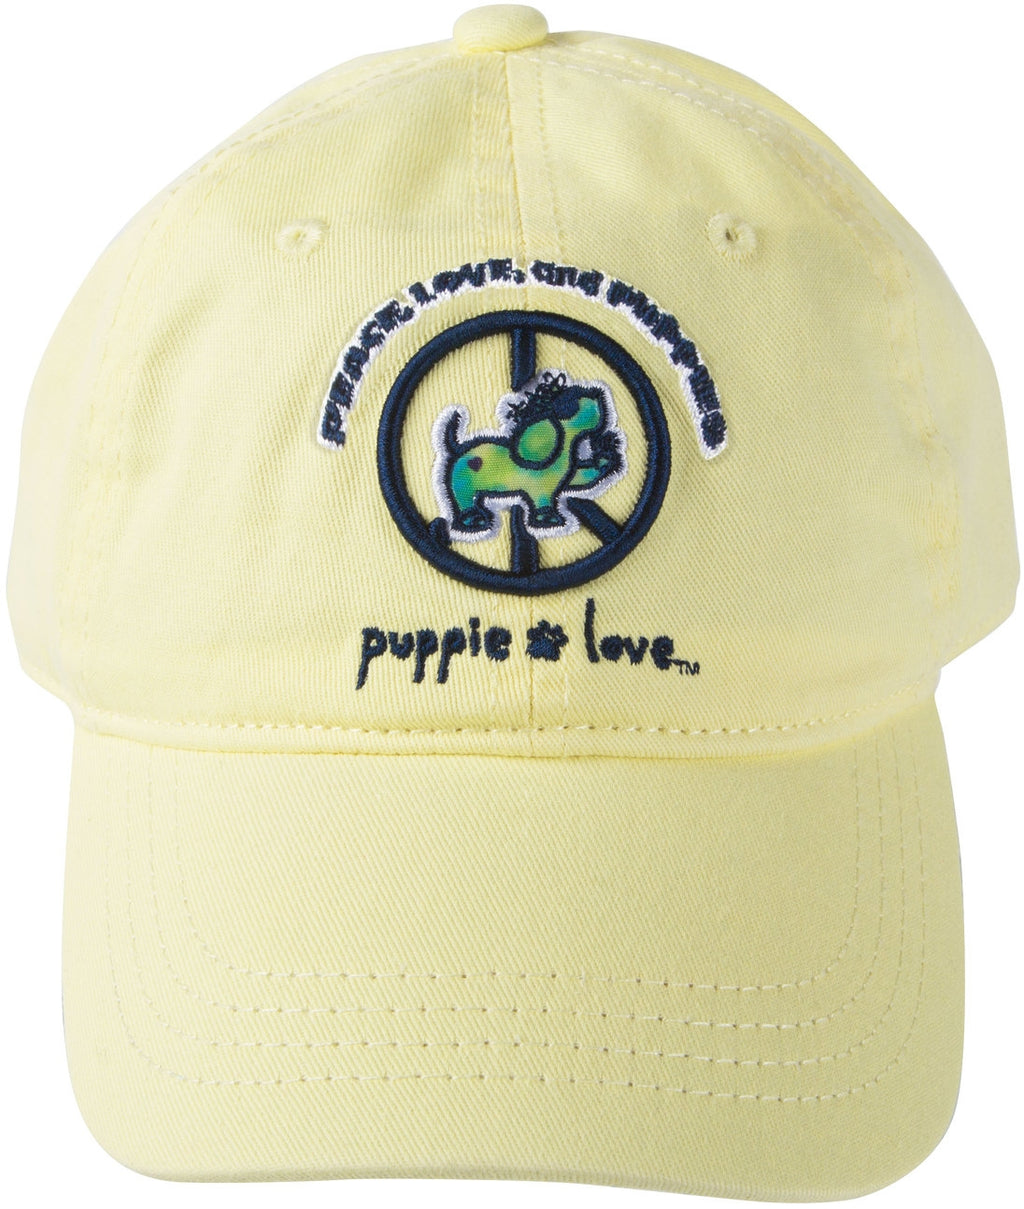 PEACE PUP HAT - Puppie Love